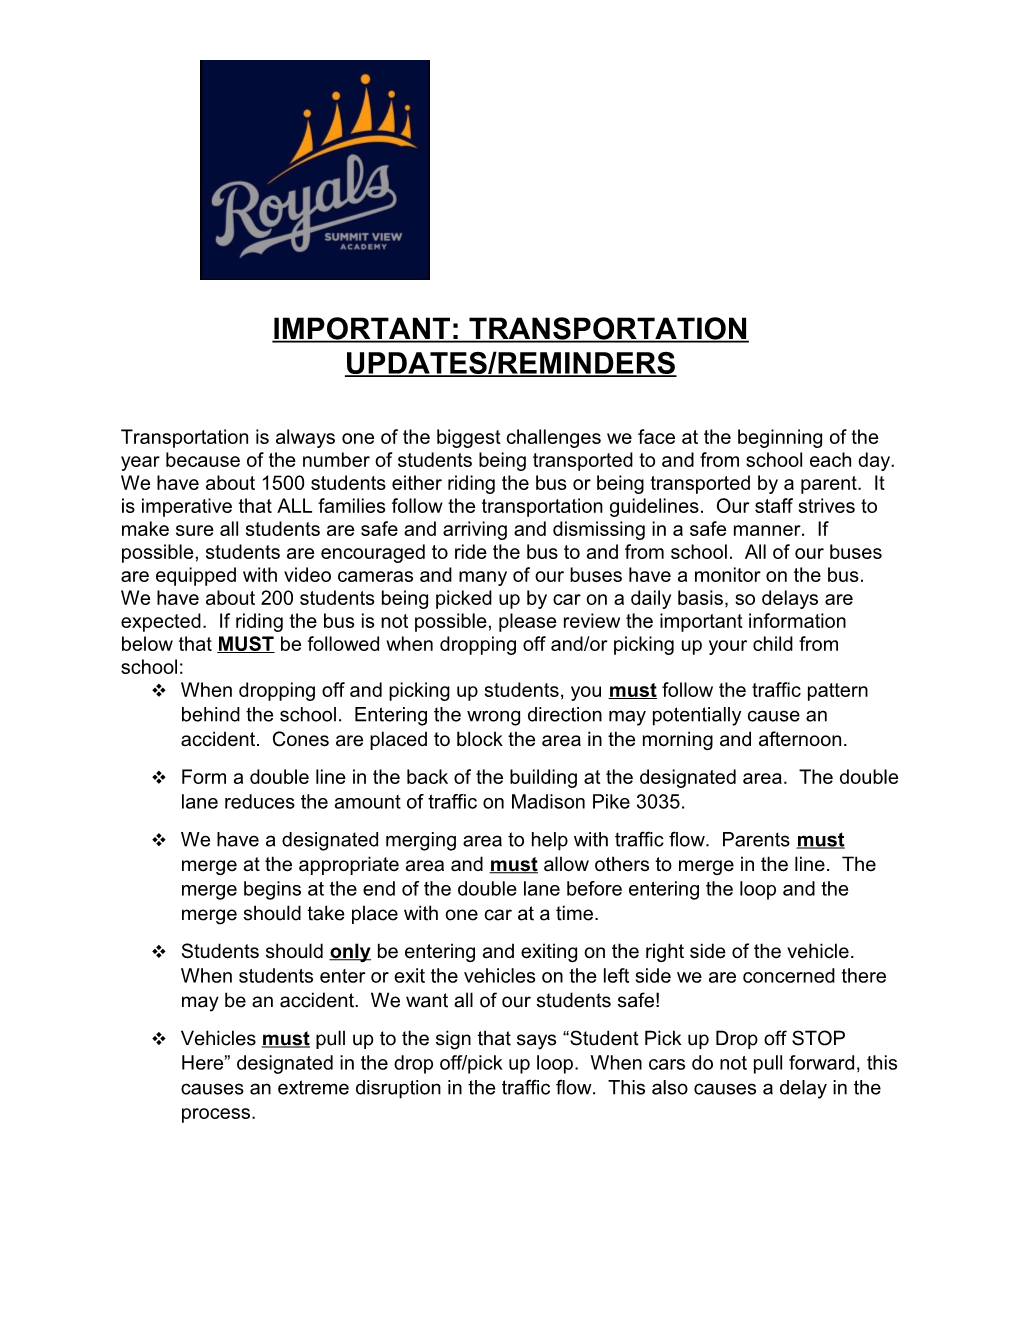 Important: Transportation Updates/Reminders